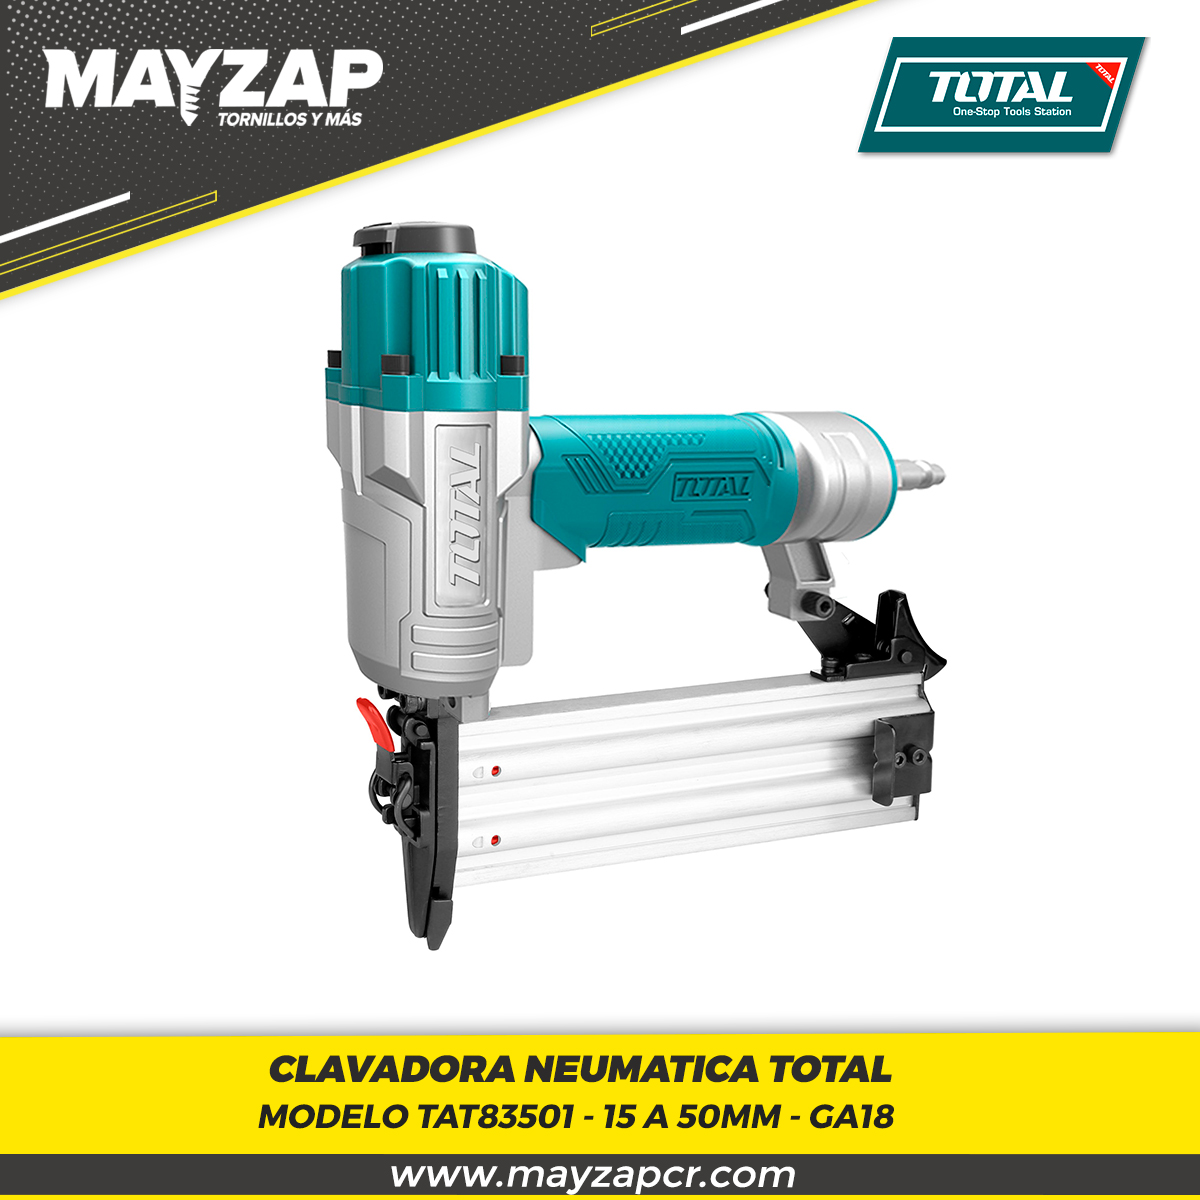 Clavadora Neumatica TOTAL TOTAL MODELO TAT83501 - Mayzap Tornillos